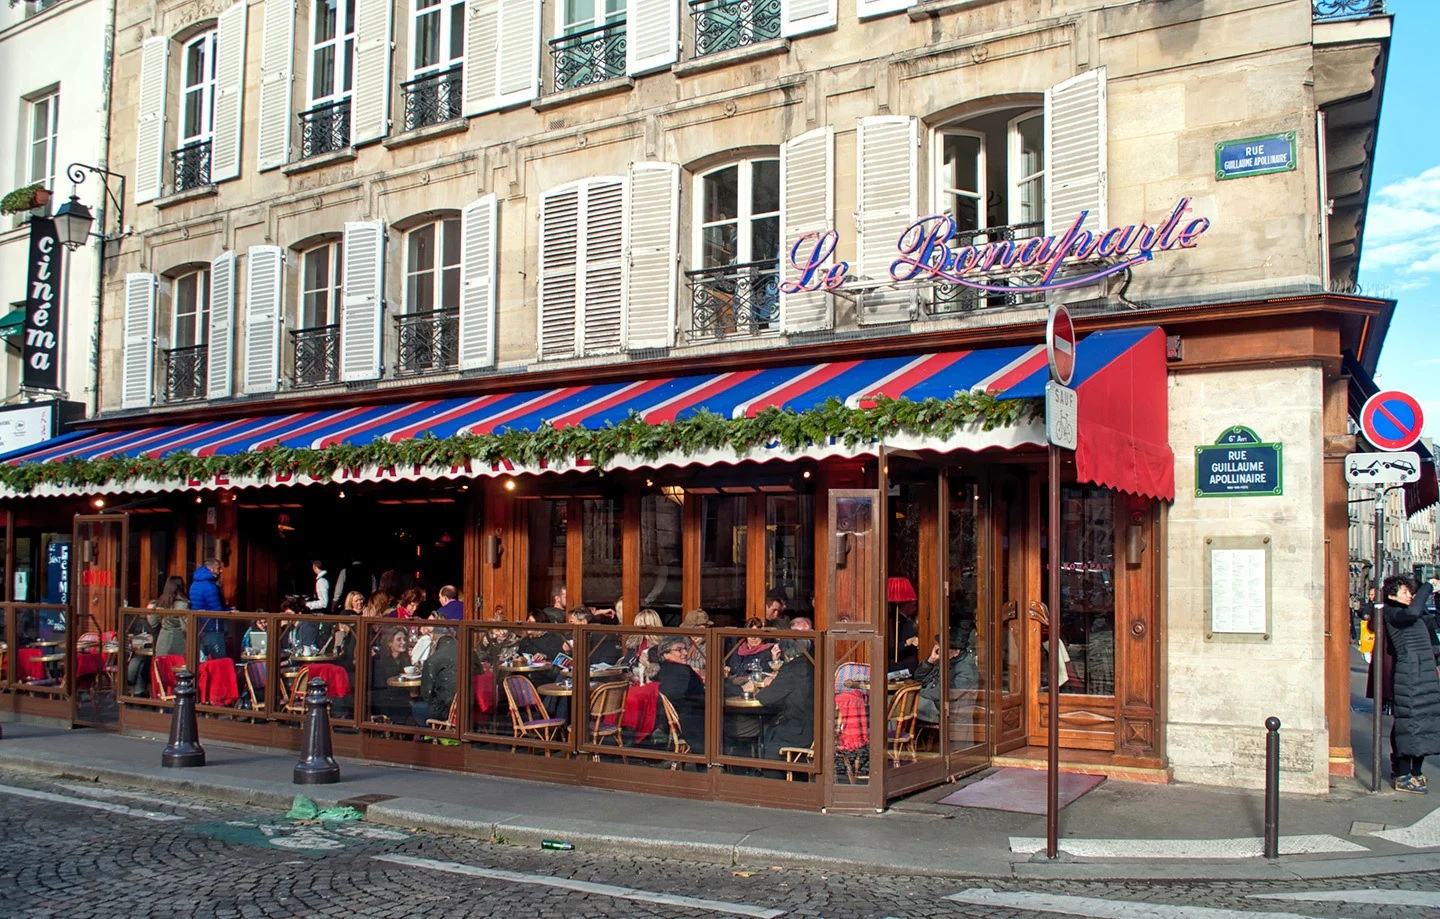 Parisian cafe in St Germain